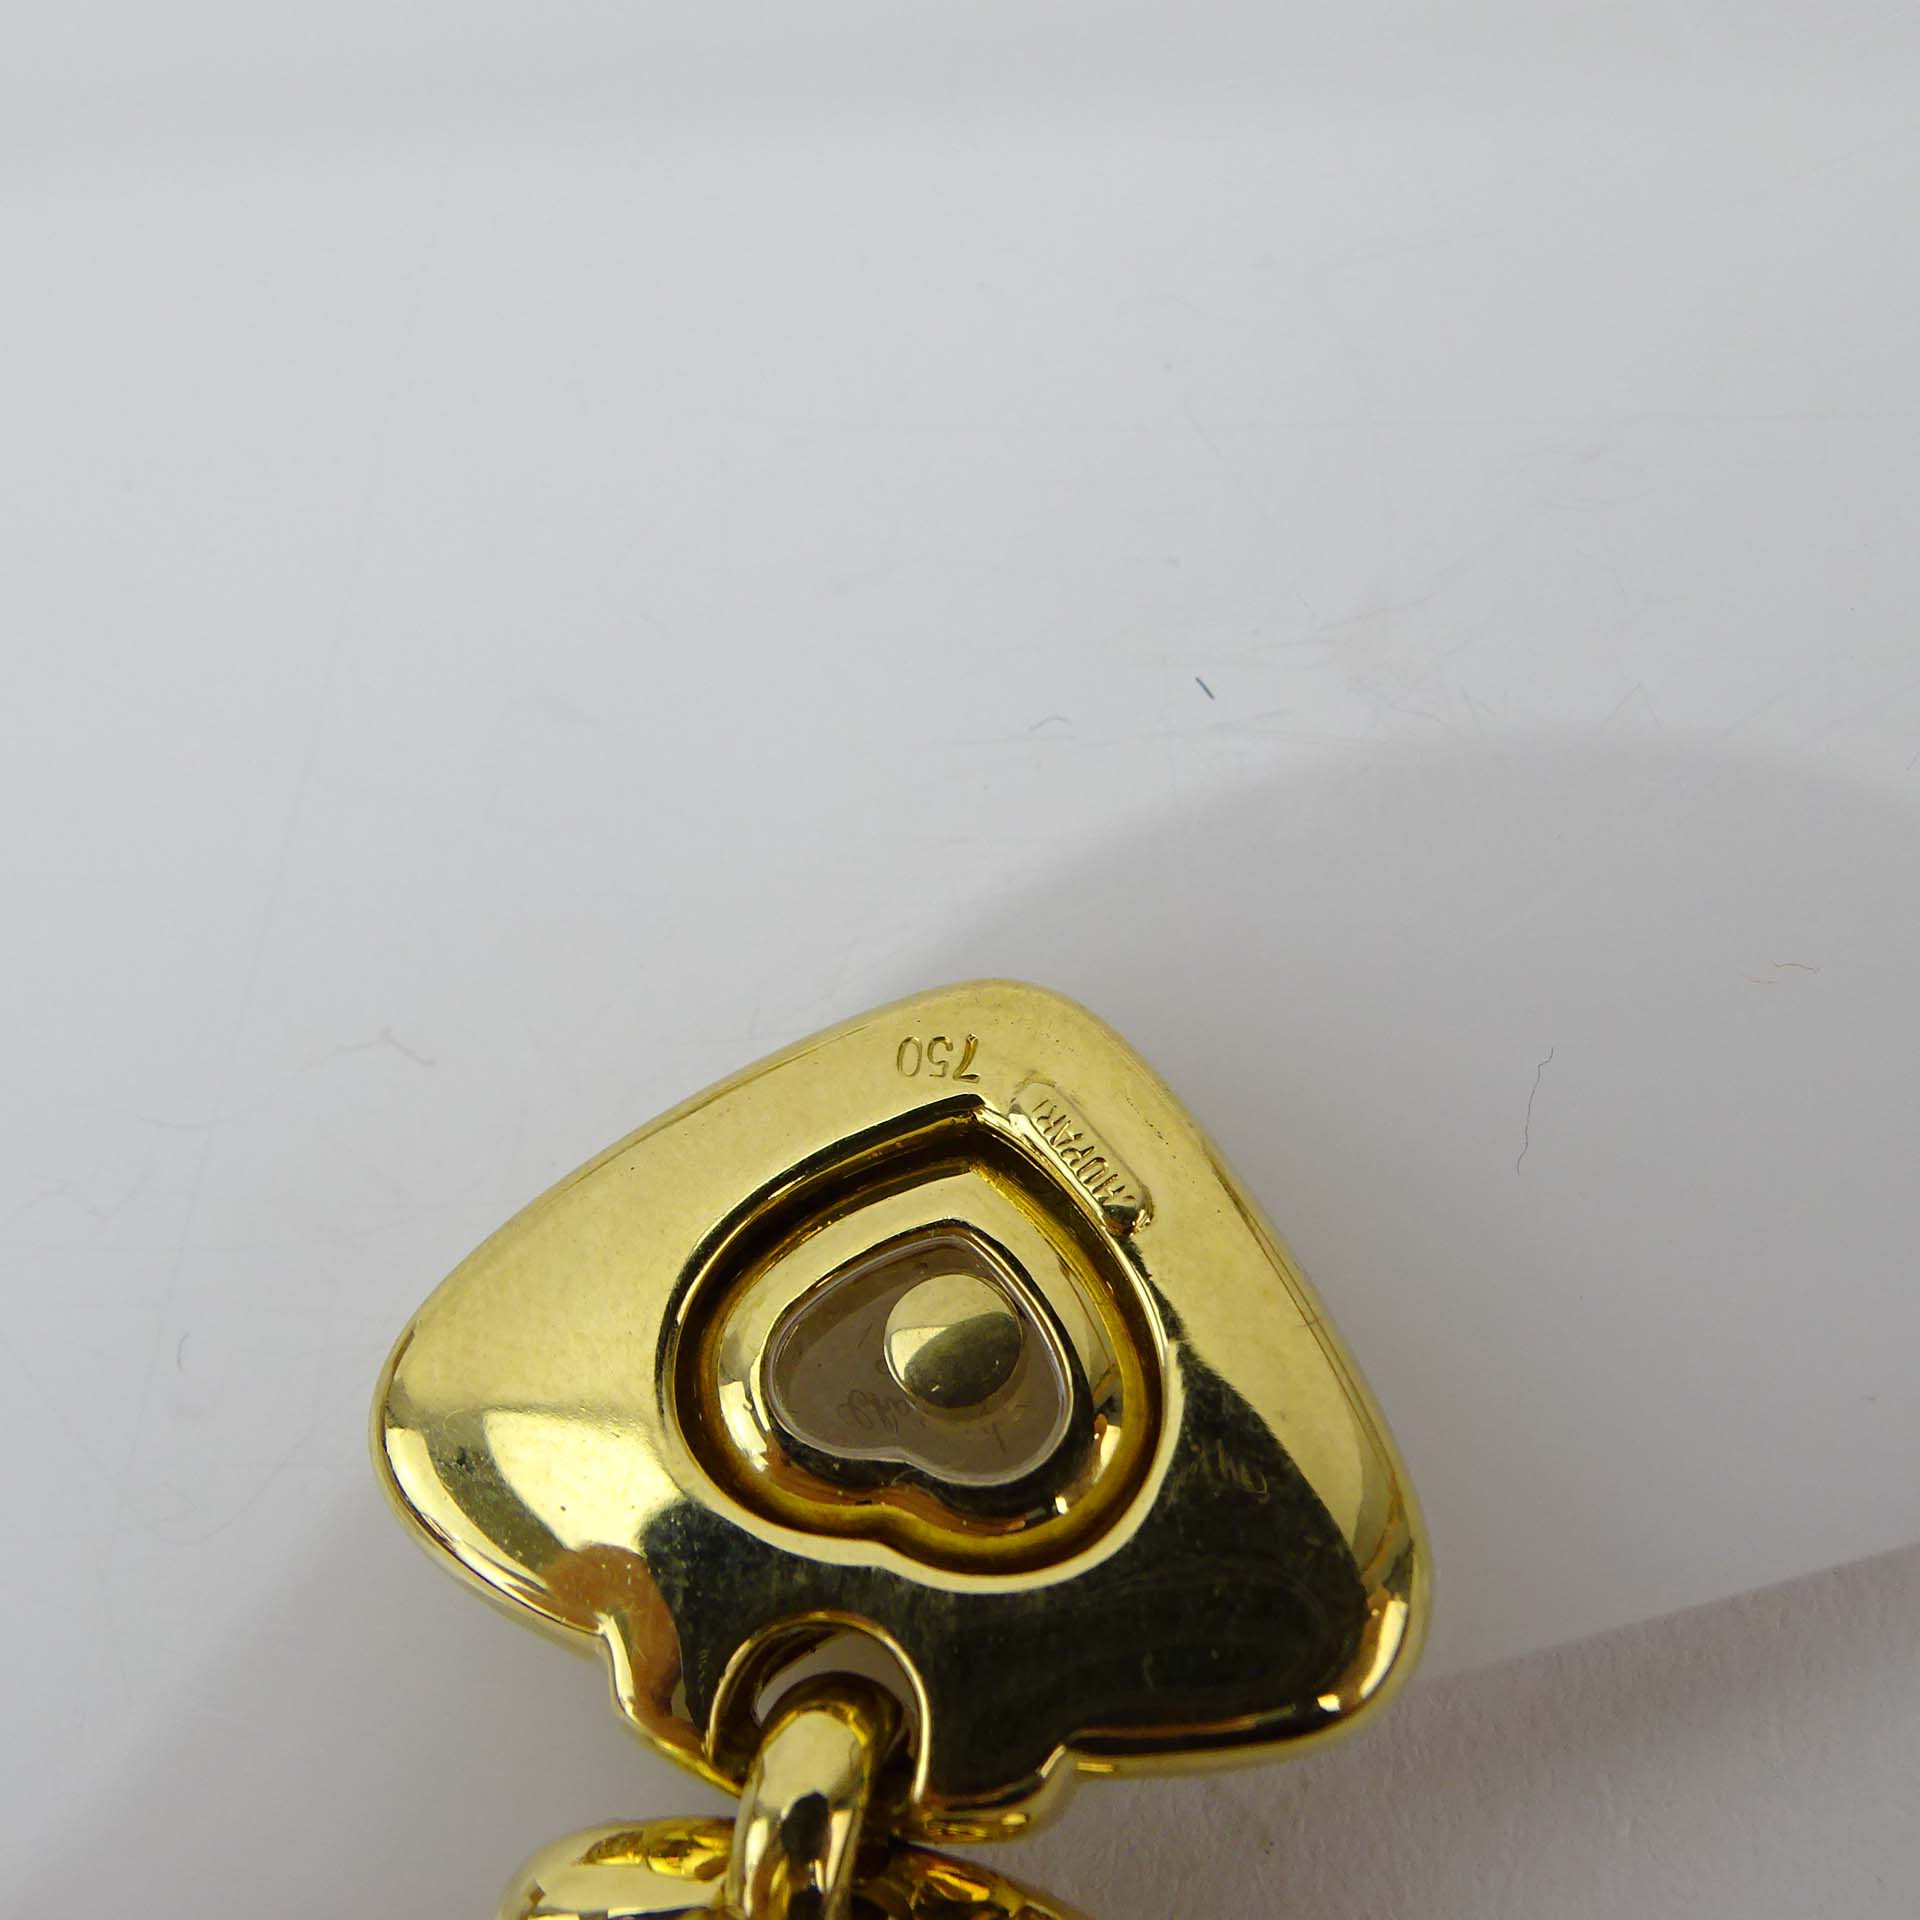 Chopard Approx. 2.50 Carat Diamond and 18 Karat Yellow Gold Pendant Screw back Earrings.